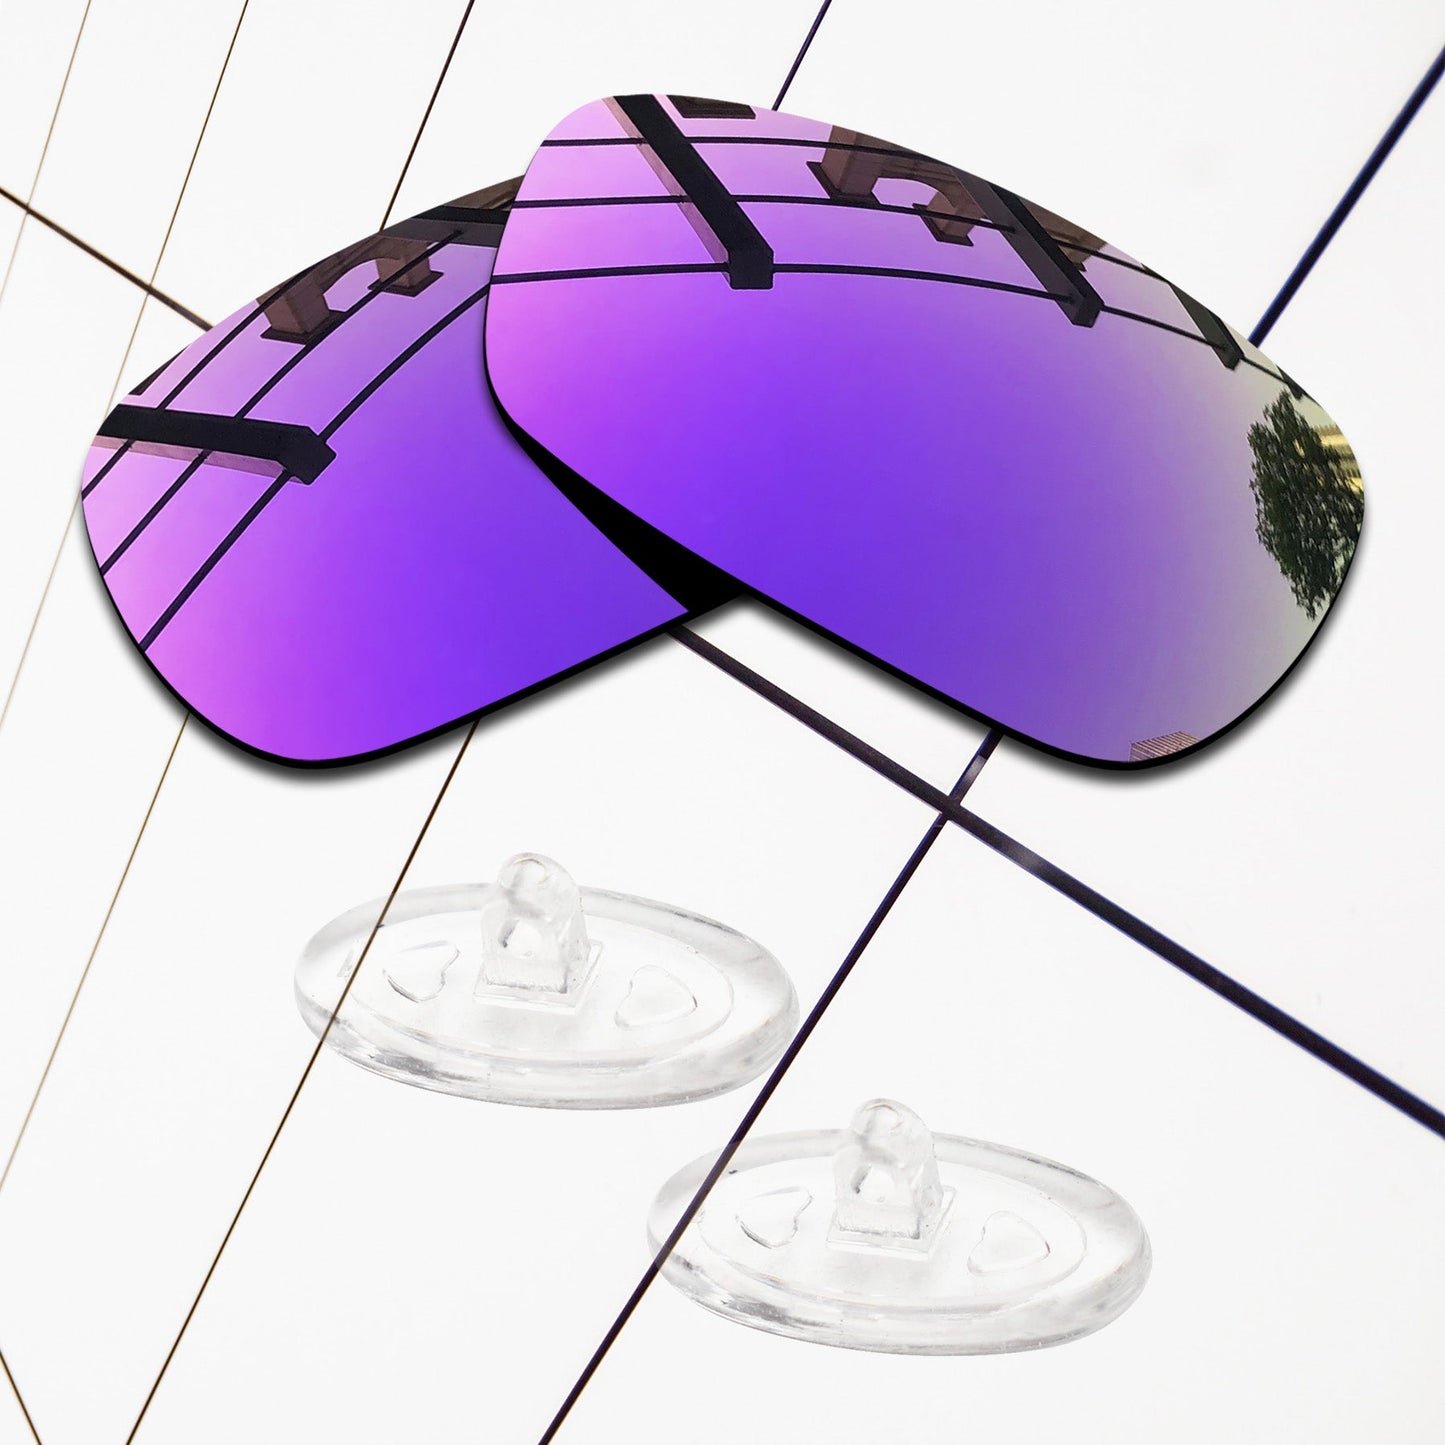 Polarized Replacement Lenses for Oakley Crosshair 2.0 Sunglasses